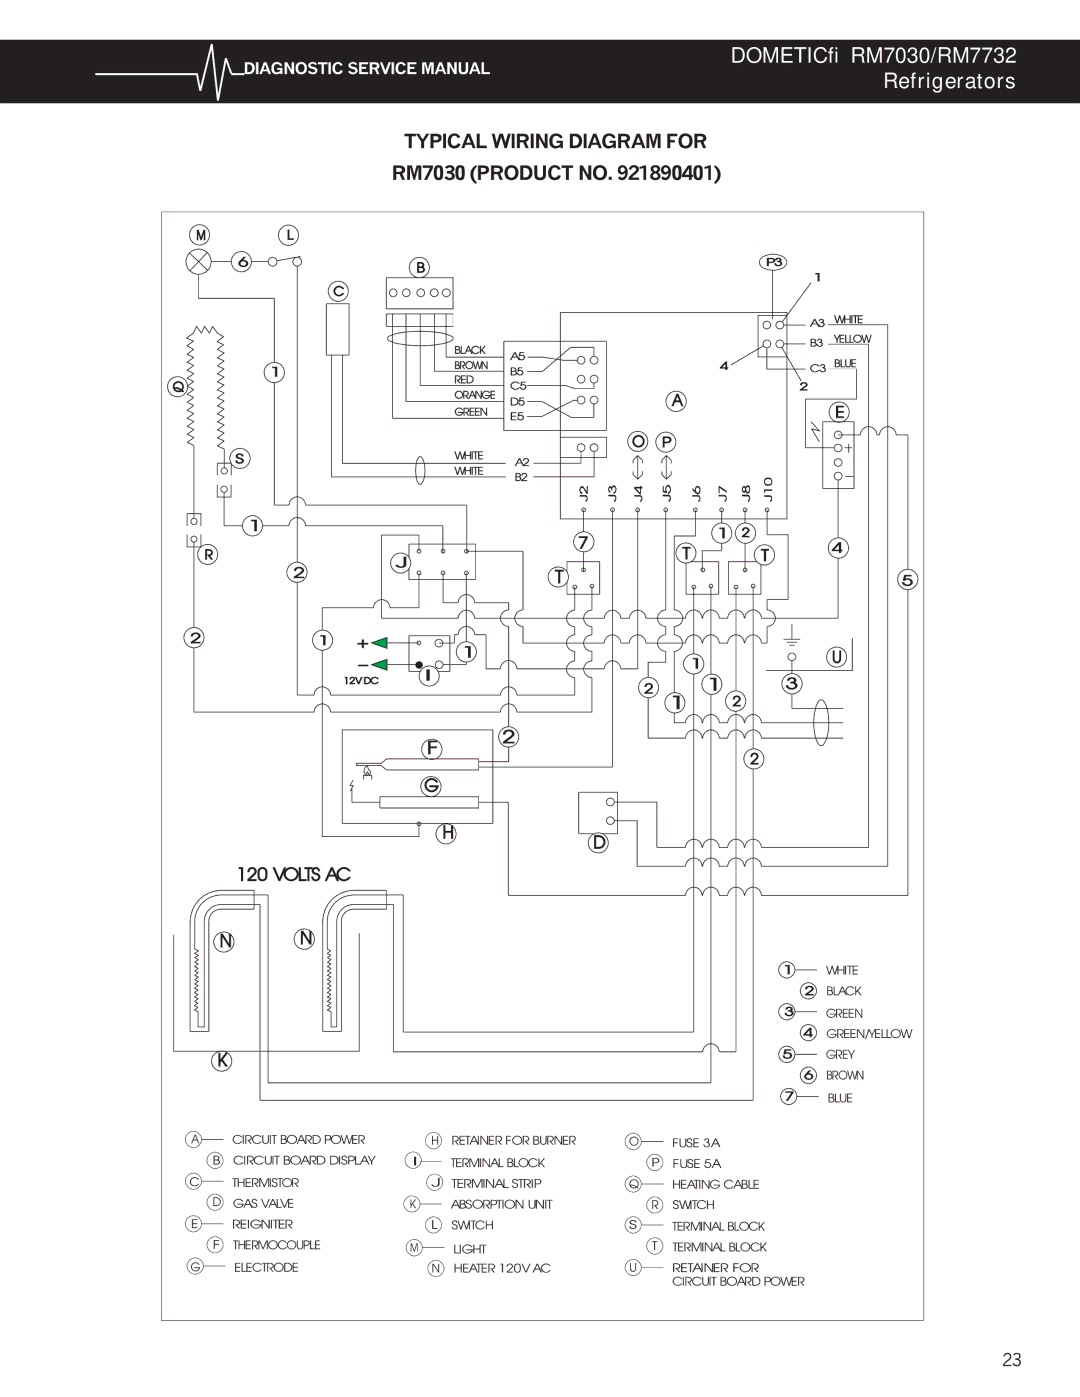 Dometic RM7732, RM7030 service manual Volts AC 